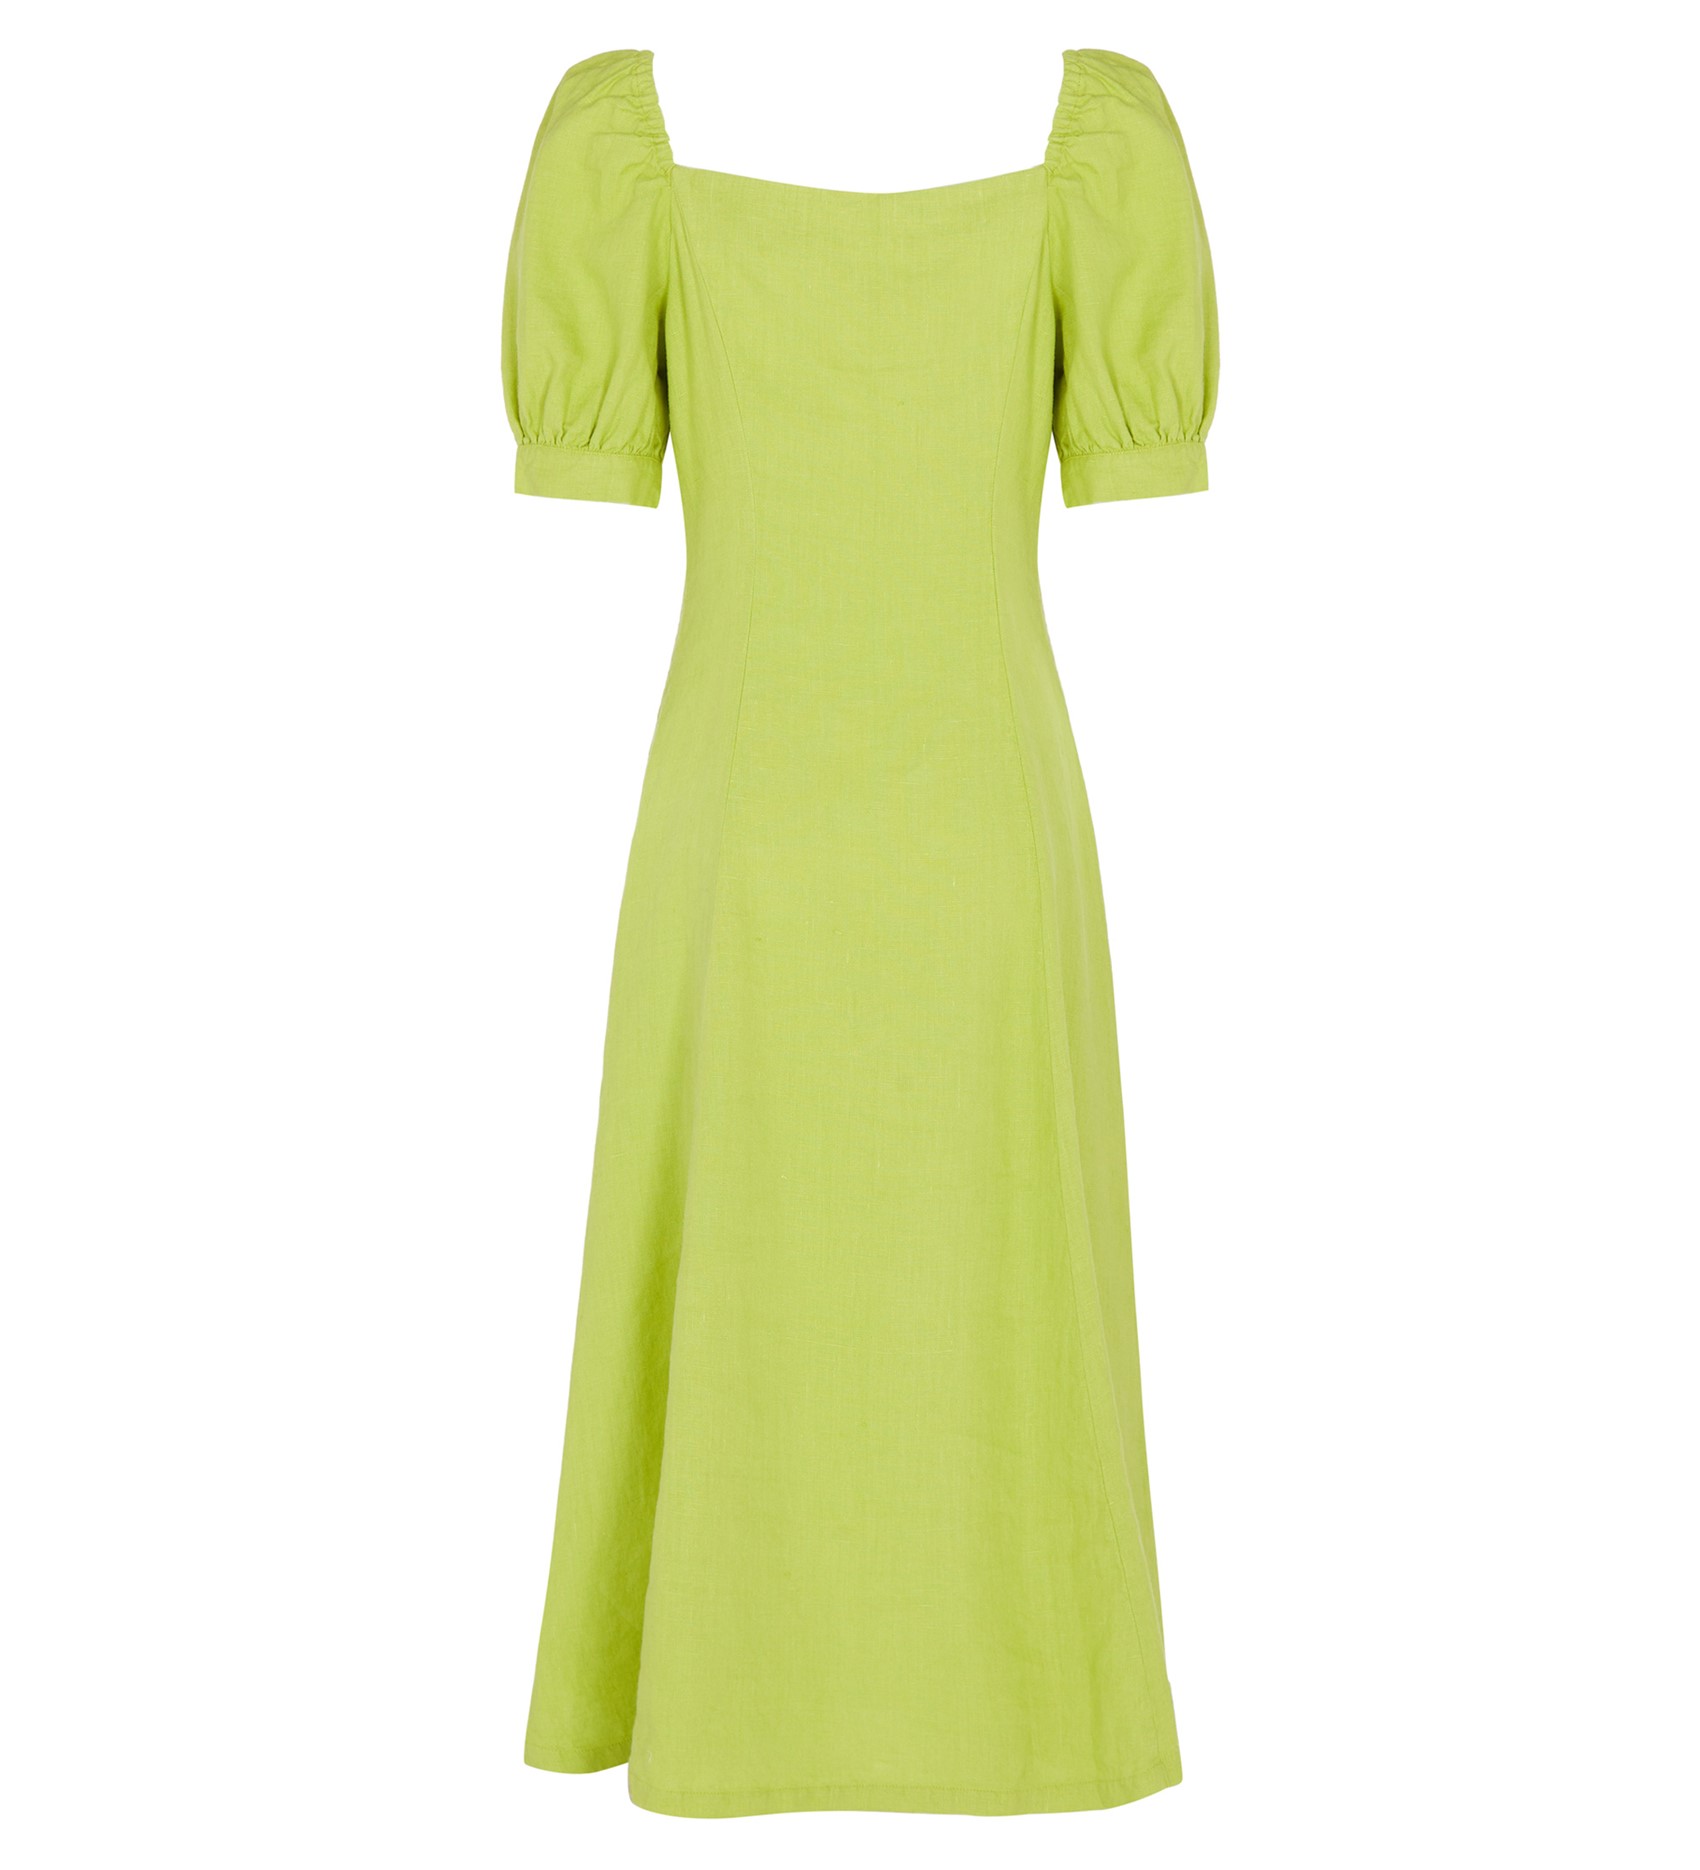 Kaylani Midi Lime Collared Dress Short Sleeves Finery London